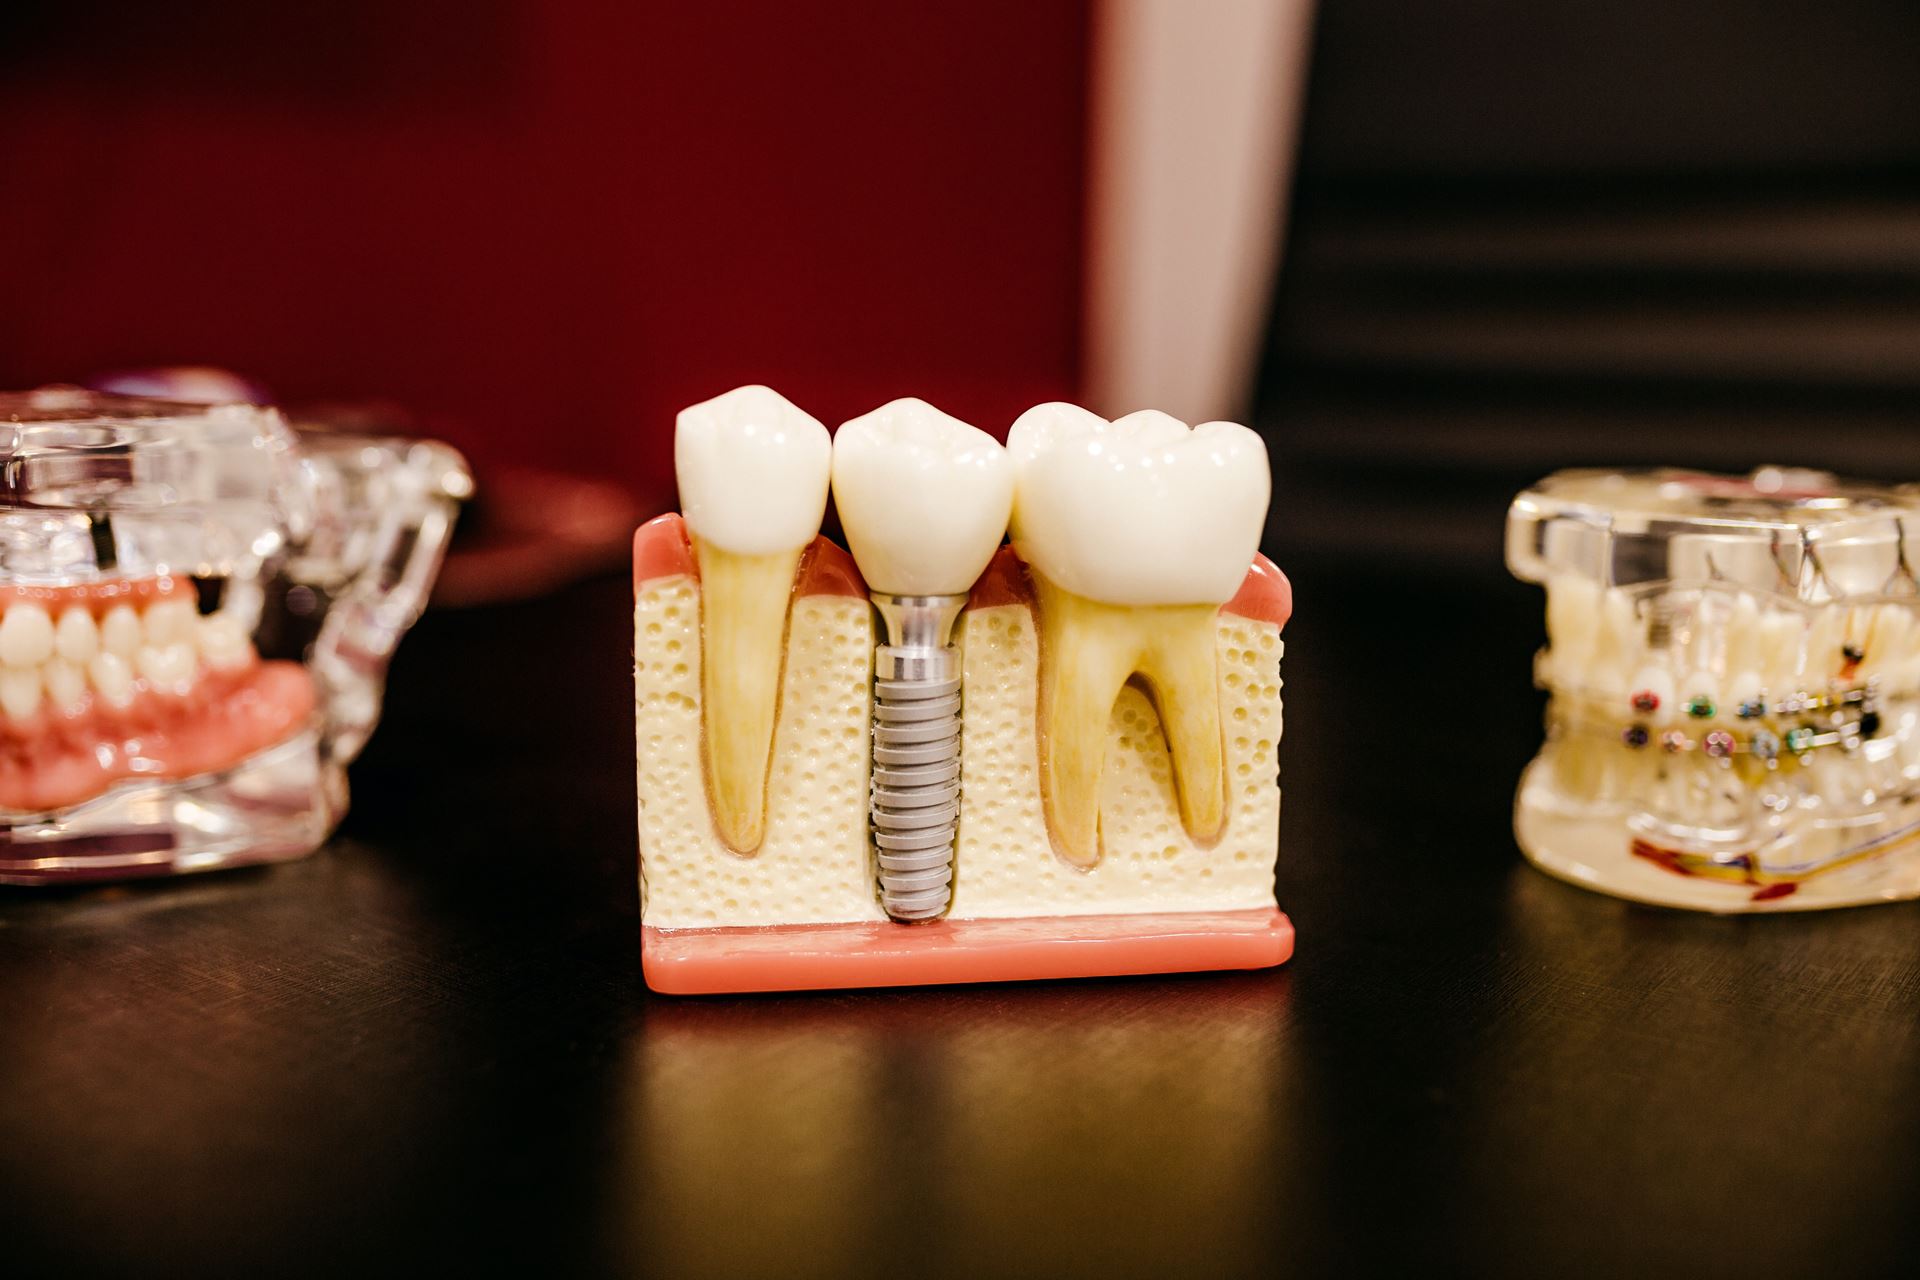 Teeth and dental work